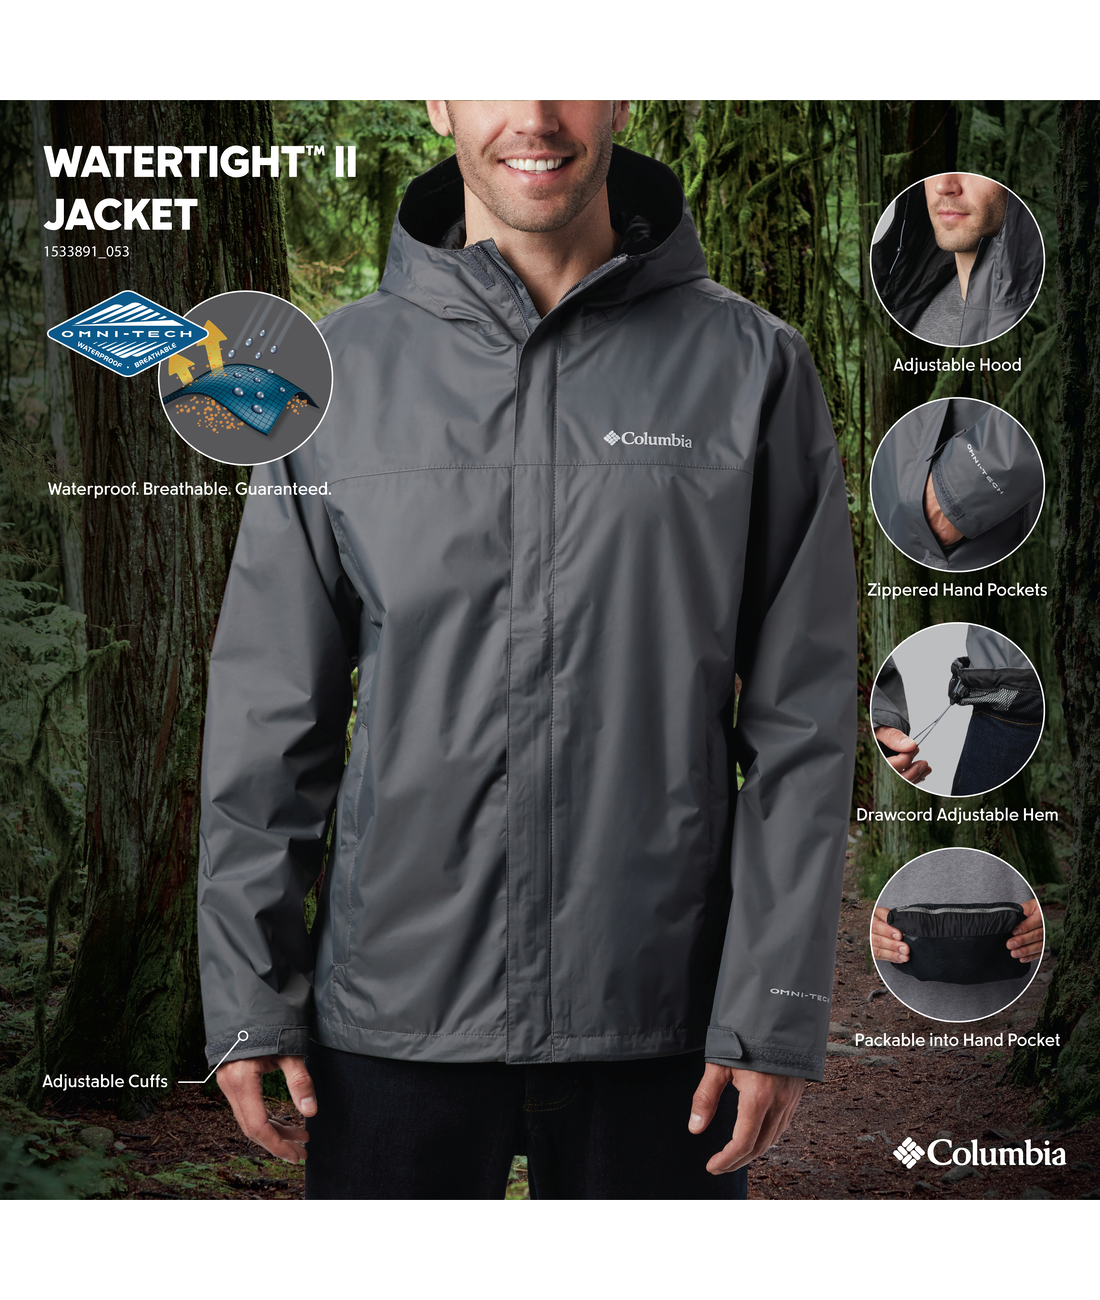 Watertight II Jacket